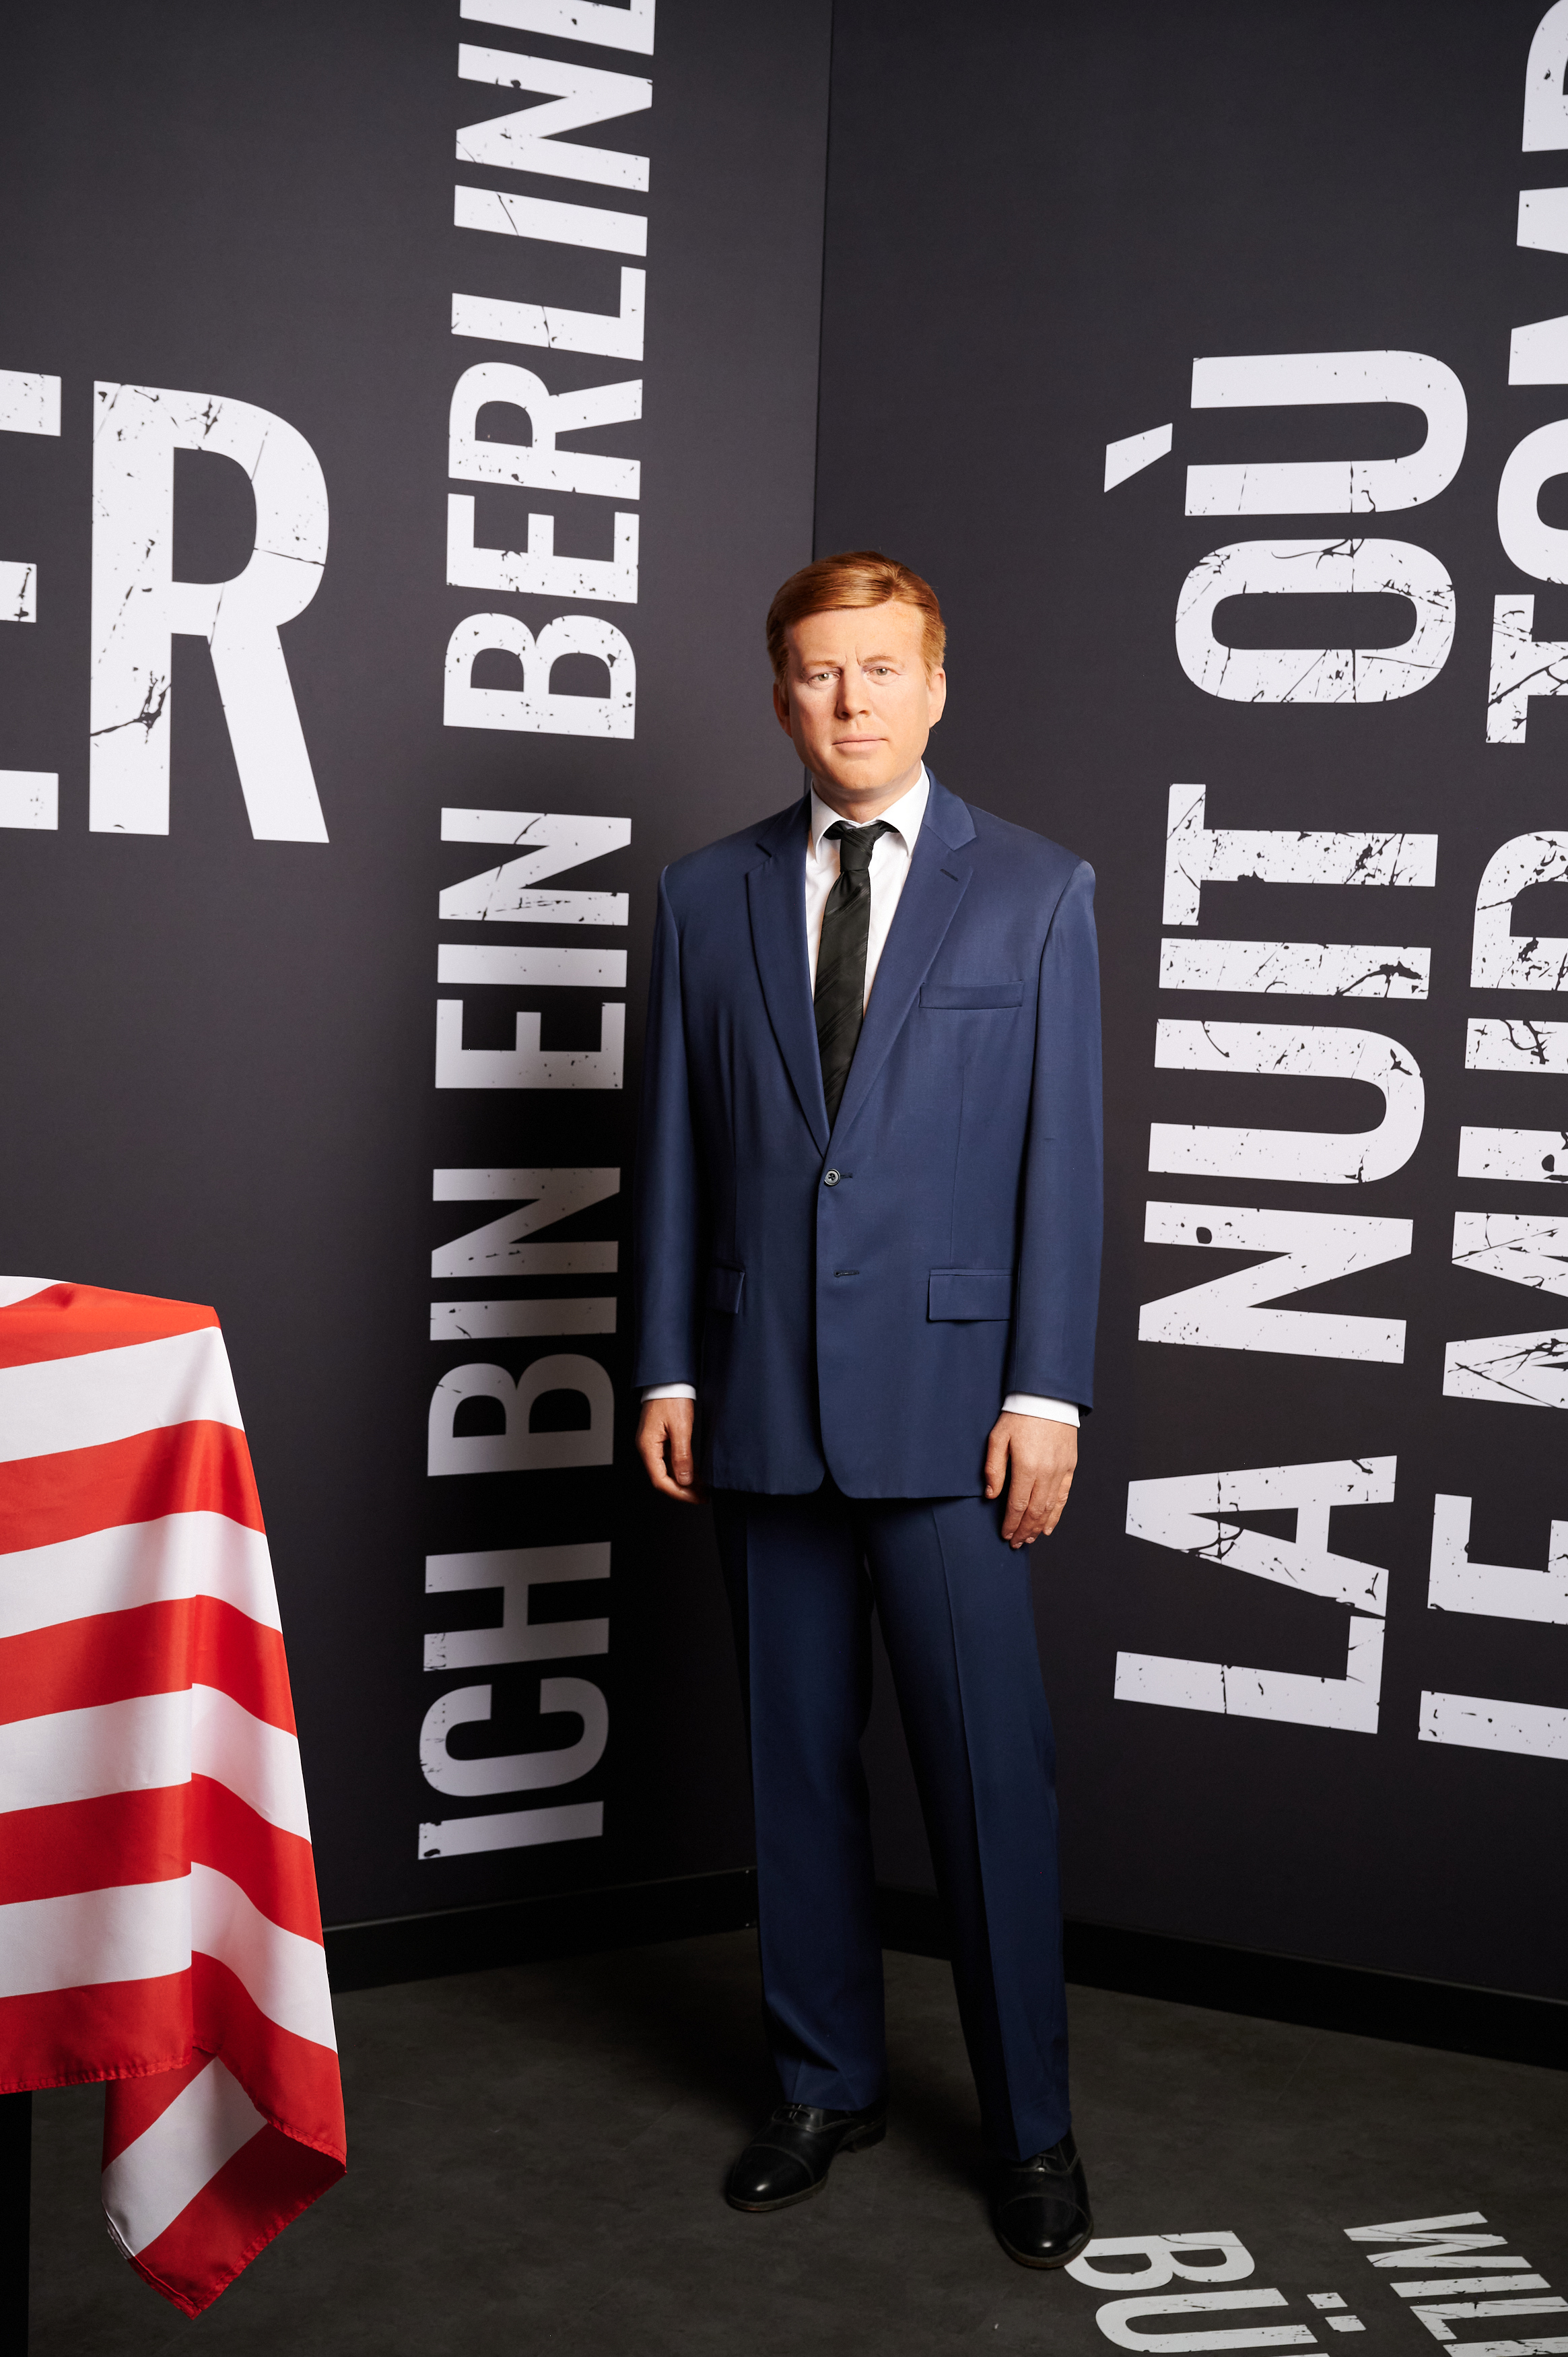 John F. Kennedy at Madame Tussauds Berlin